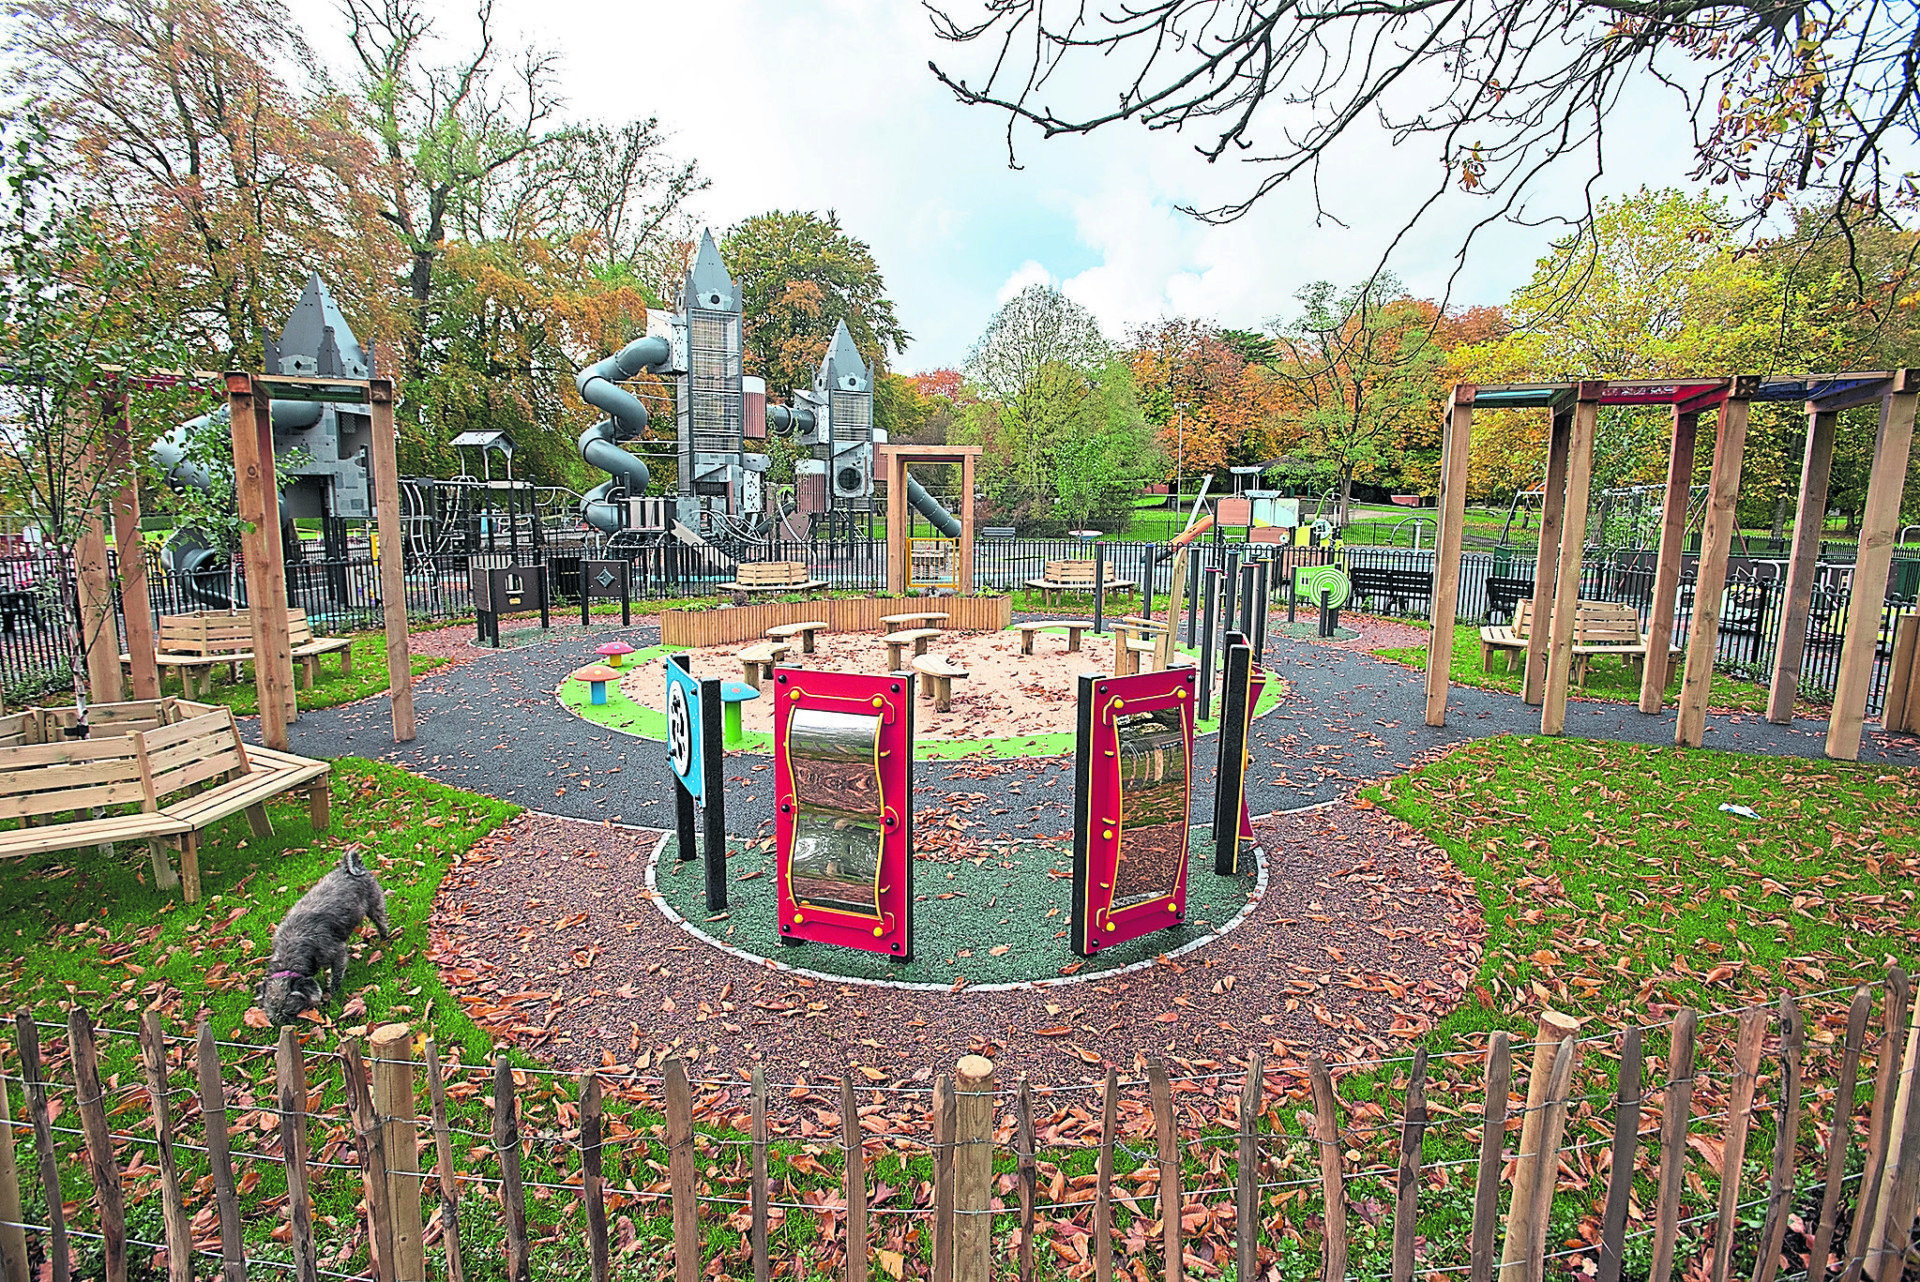 Destination Play Park at Grange Park, Omagh reopens